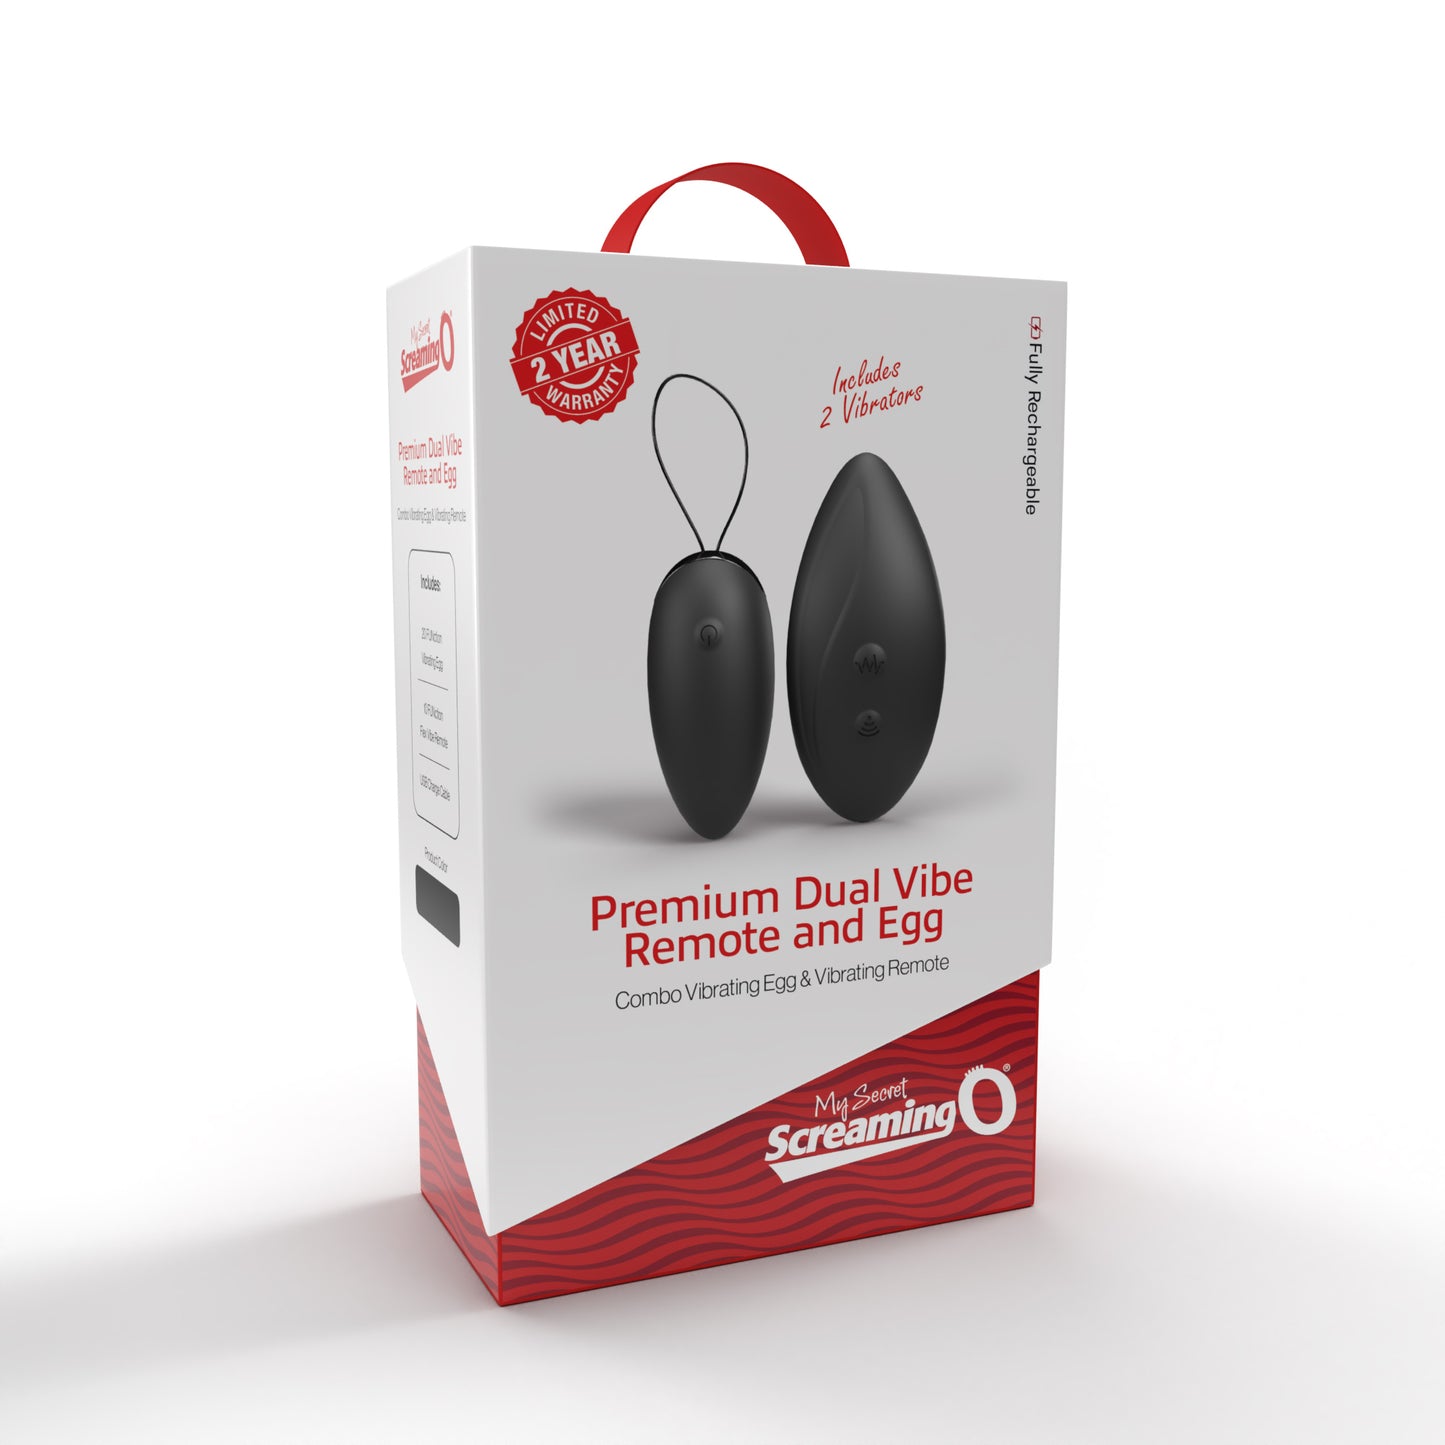 Premium Dual Vibe Remote and Egg